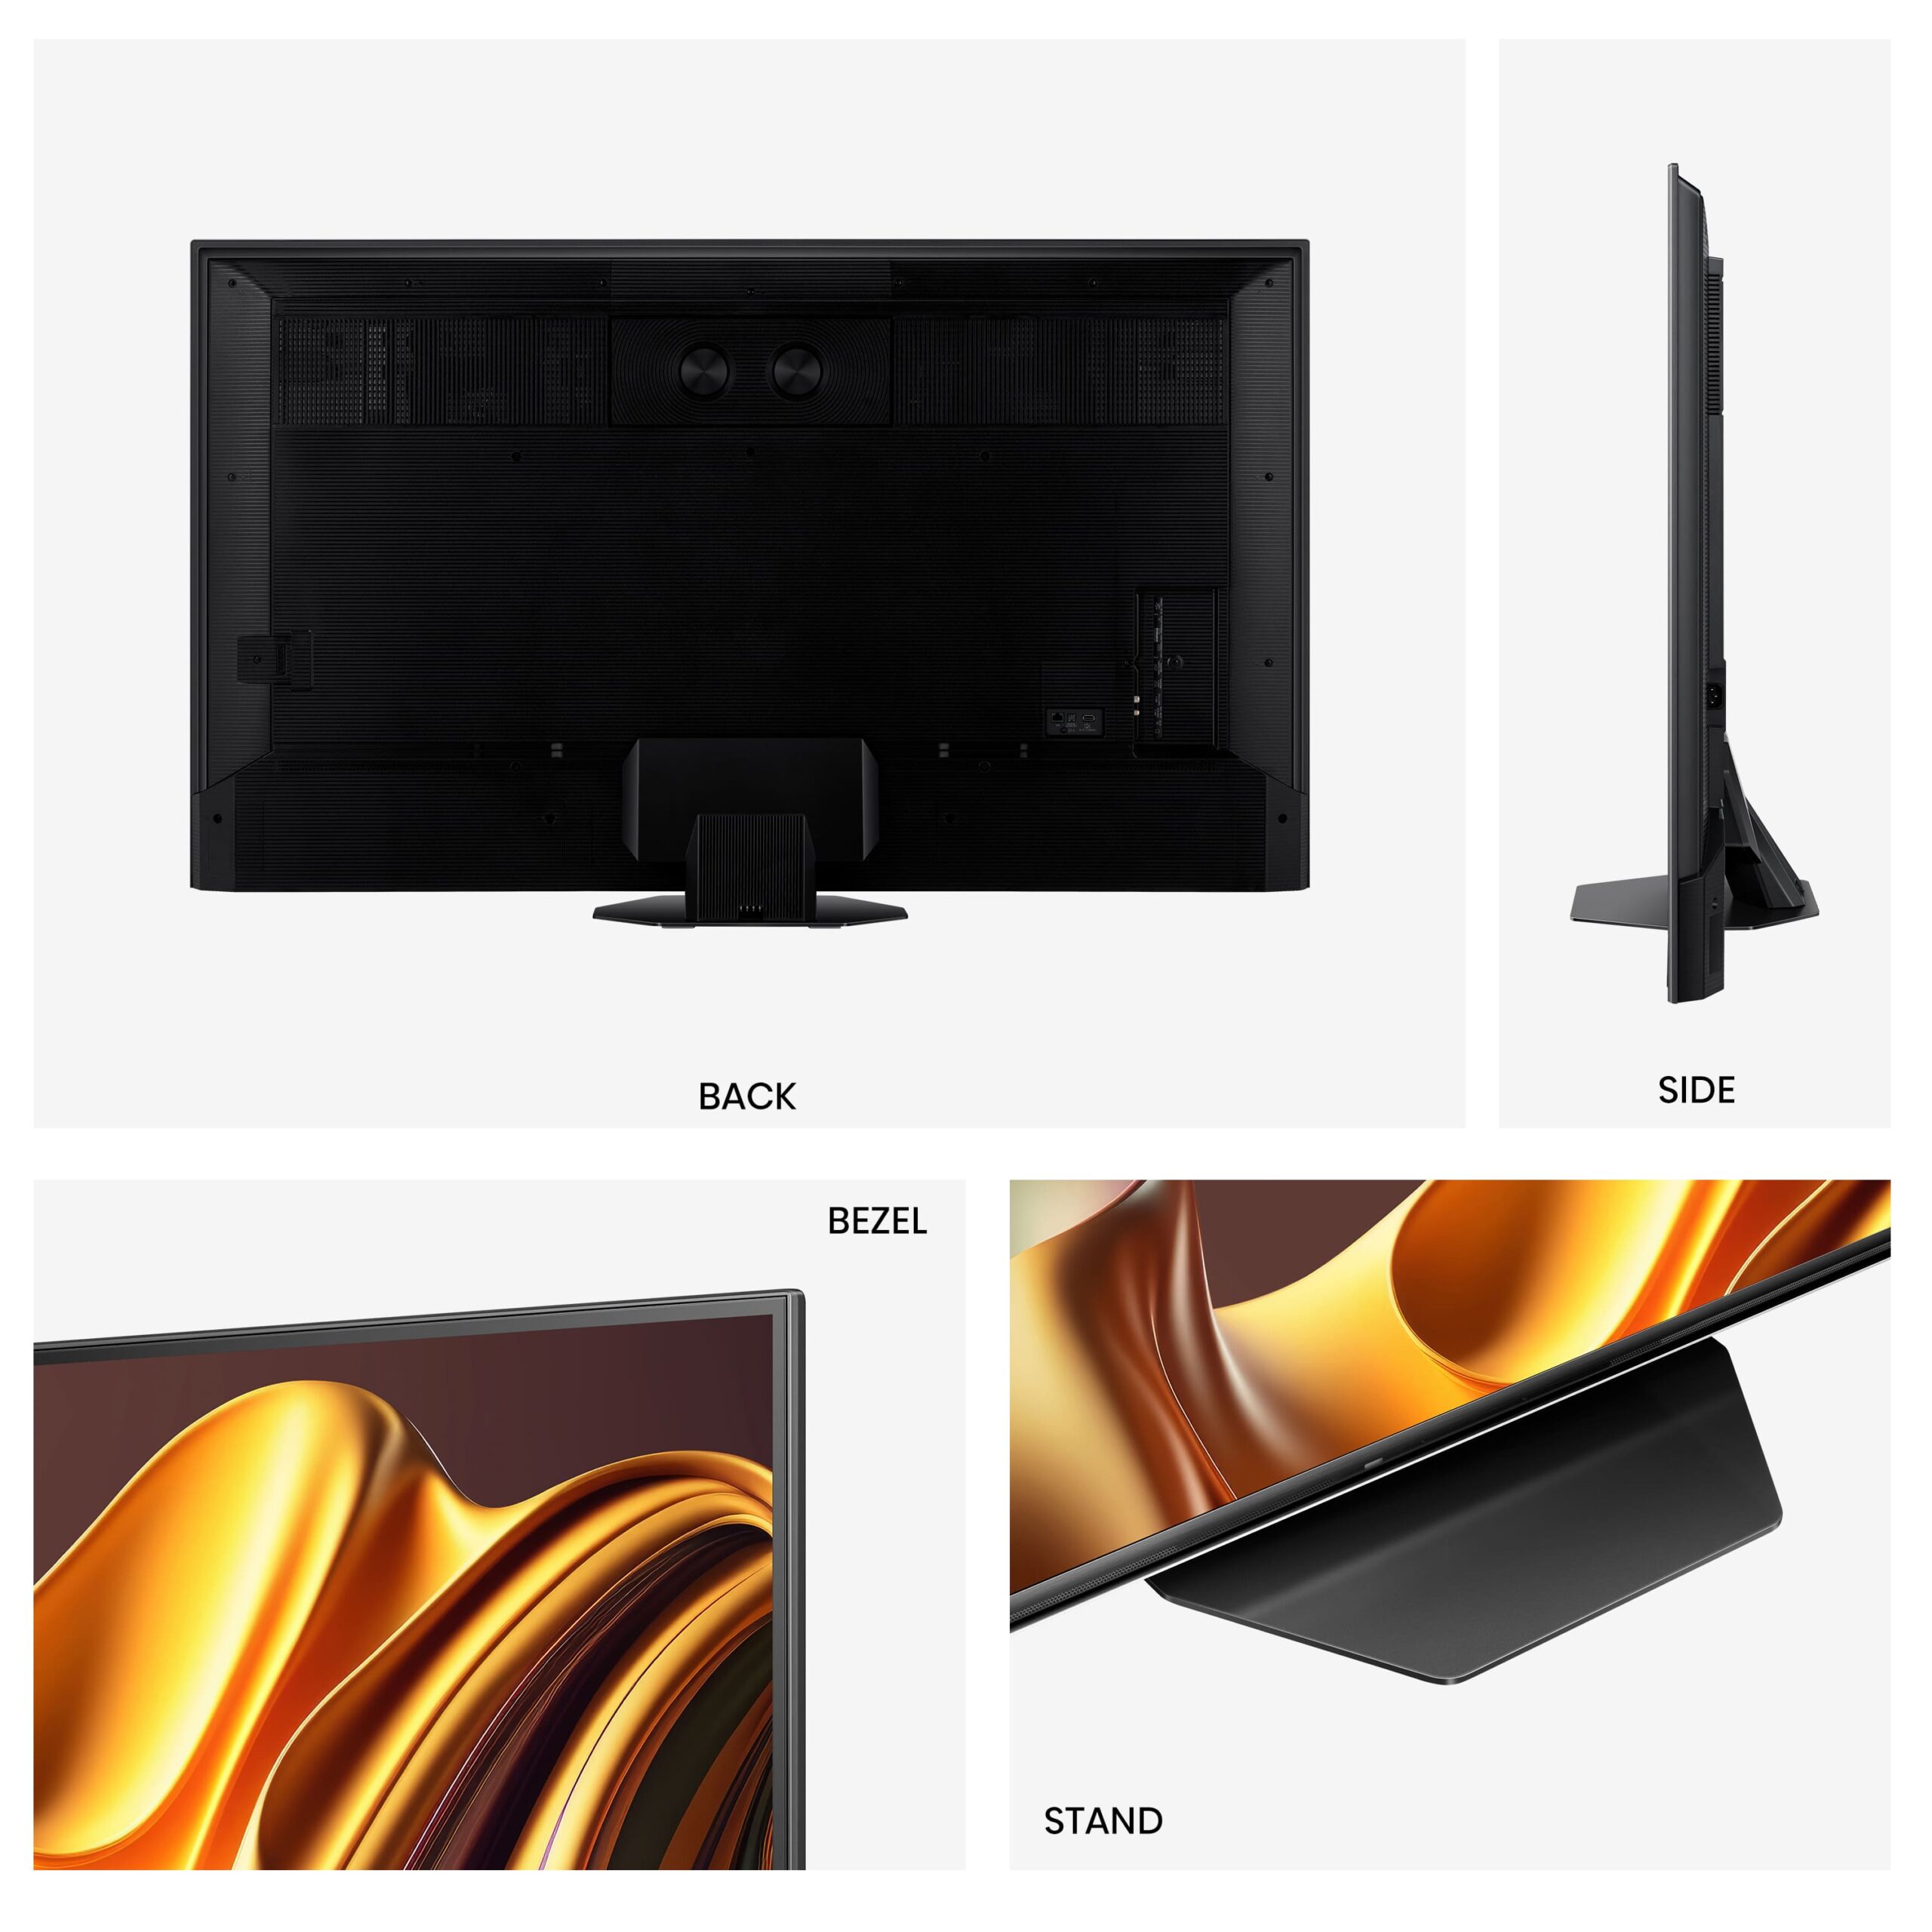 Hisense - Mini-LED TV 65U8NQ, Quantum Dot Colour, 2.1.2 Som multicanal, Modo Jogo de 144Hz